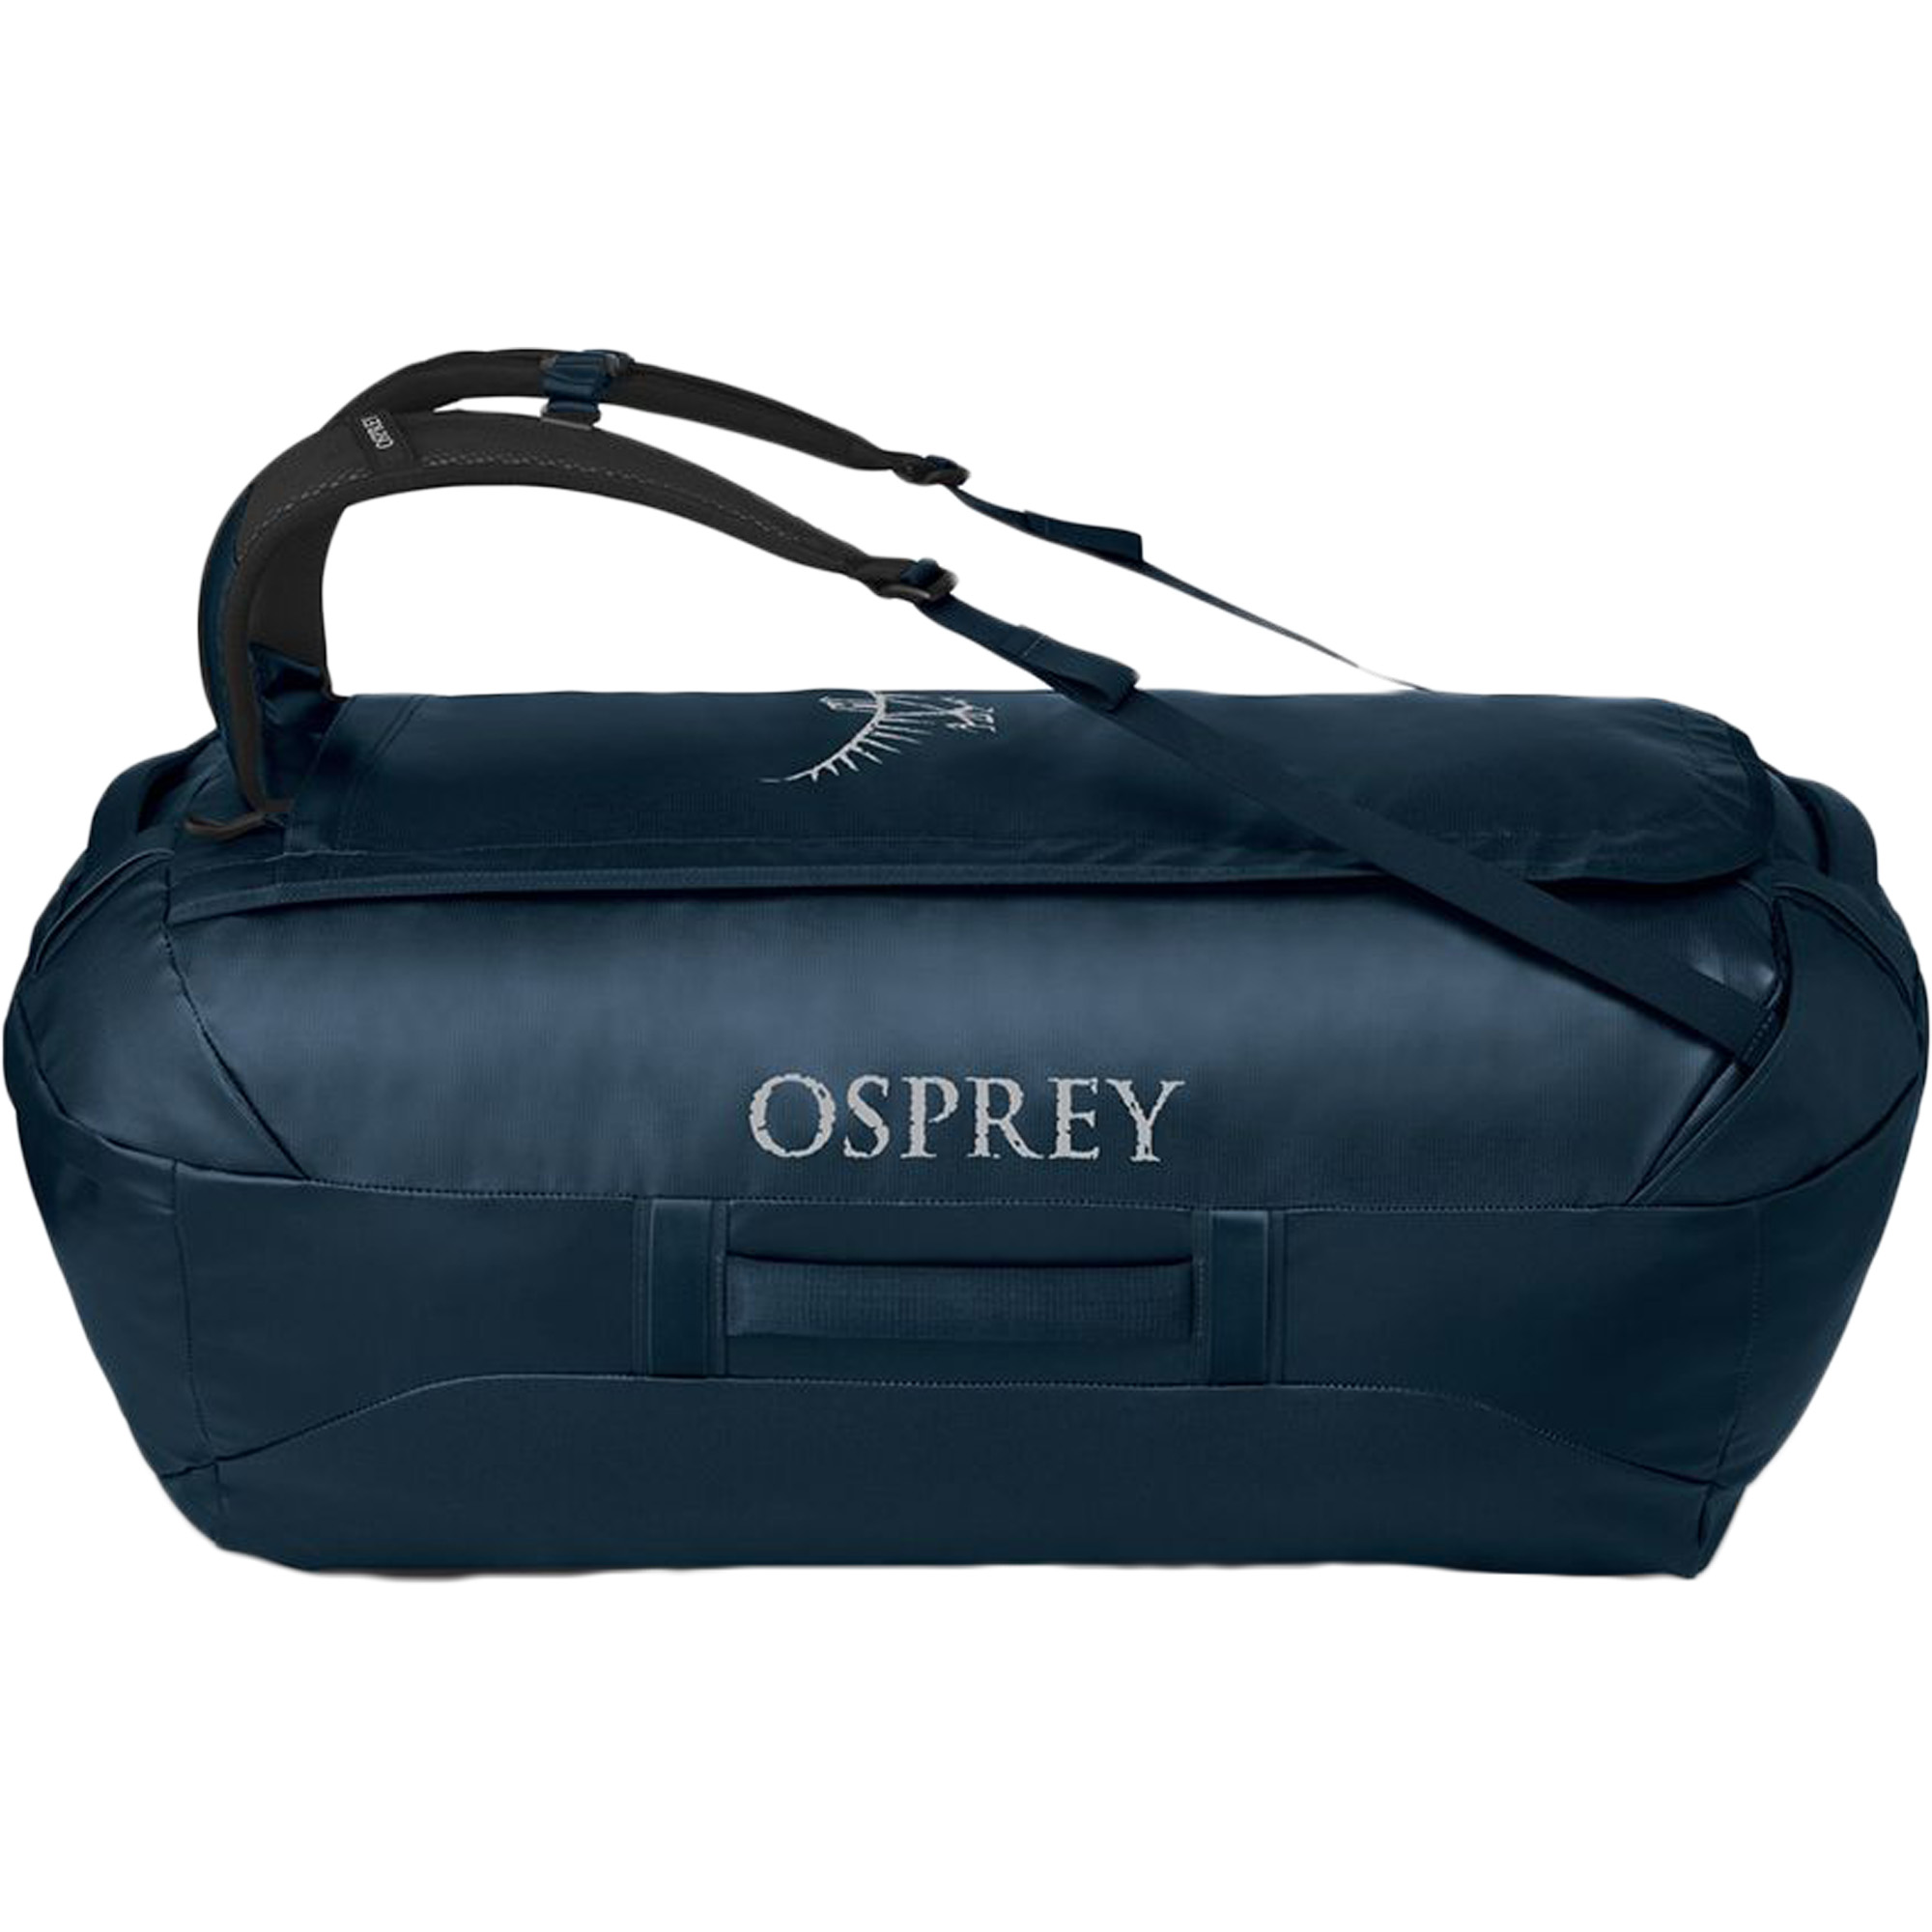 Osprey Transporter 120L Duffel Travel Bag